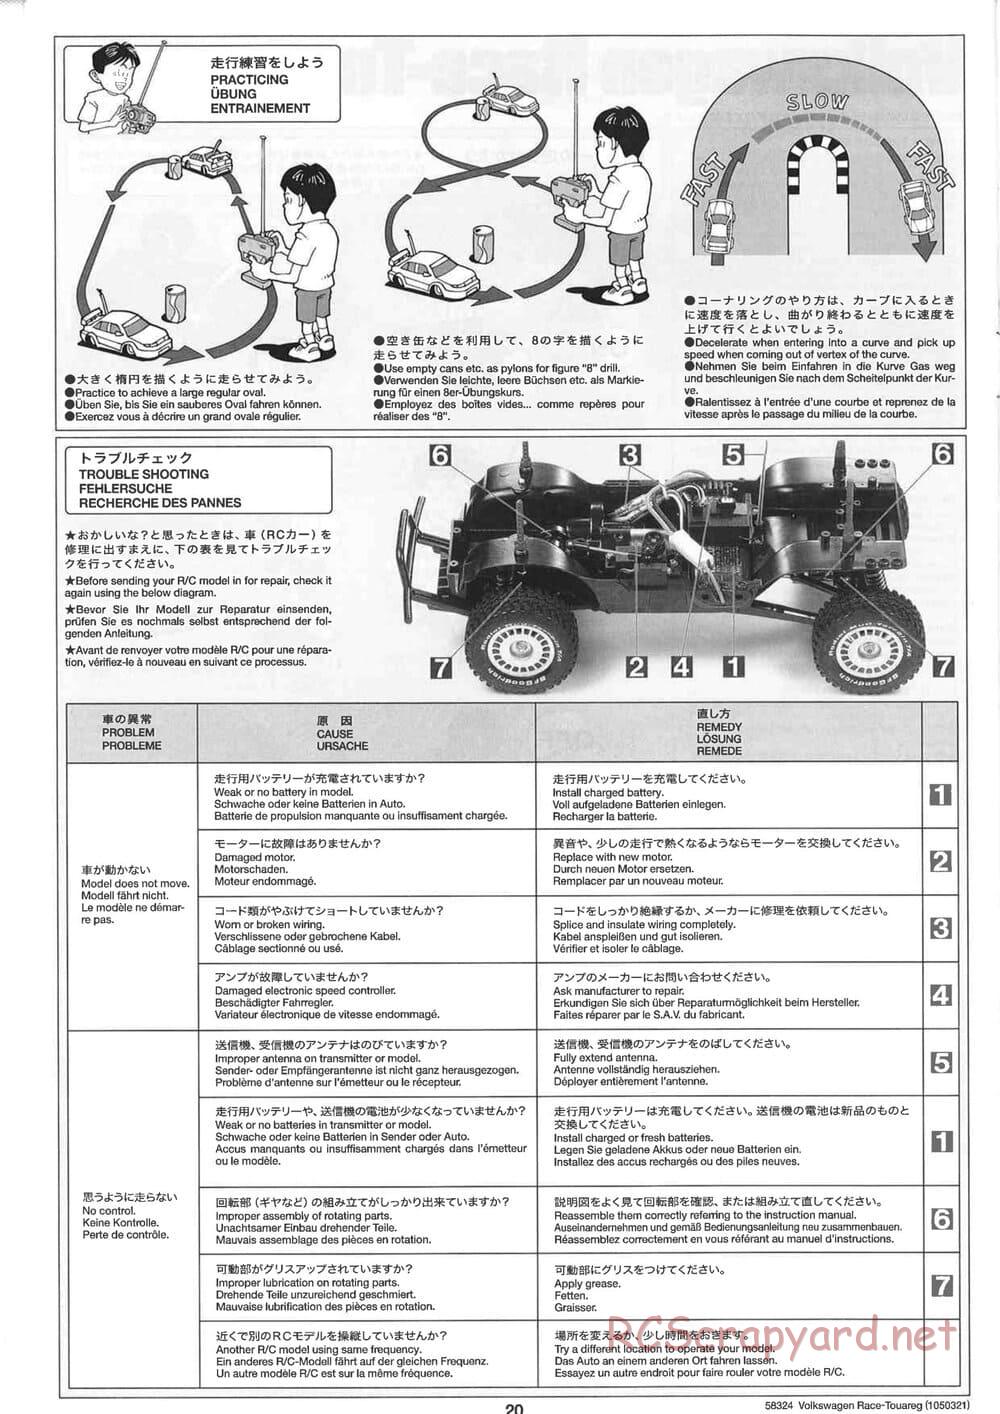 Tamiya - Volkswagen Race-Touareg - CC-01 Chassis - Manual - Page 20